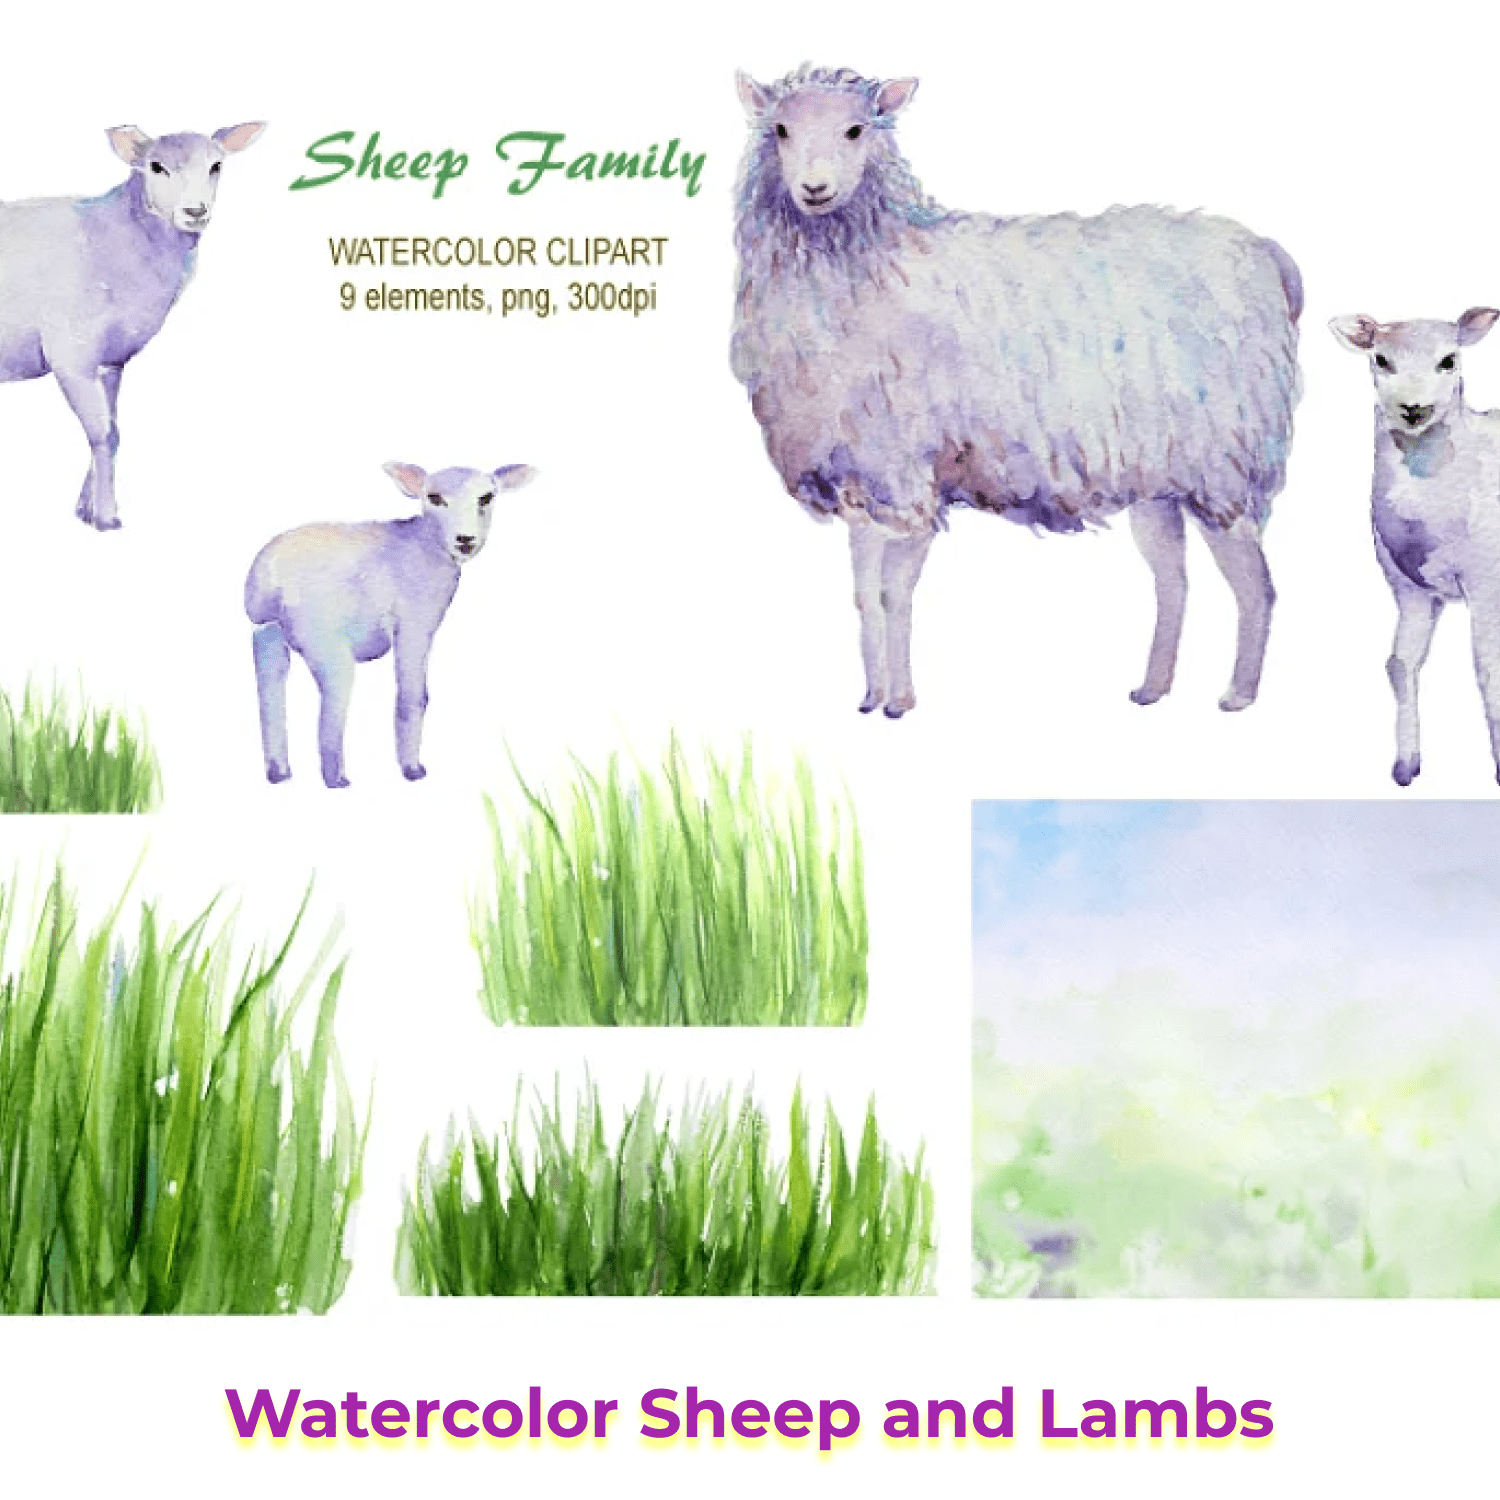 Watercolor Sheep and Lambs cover.